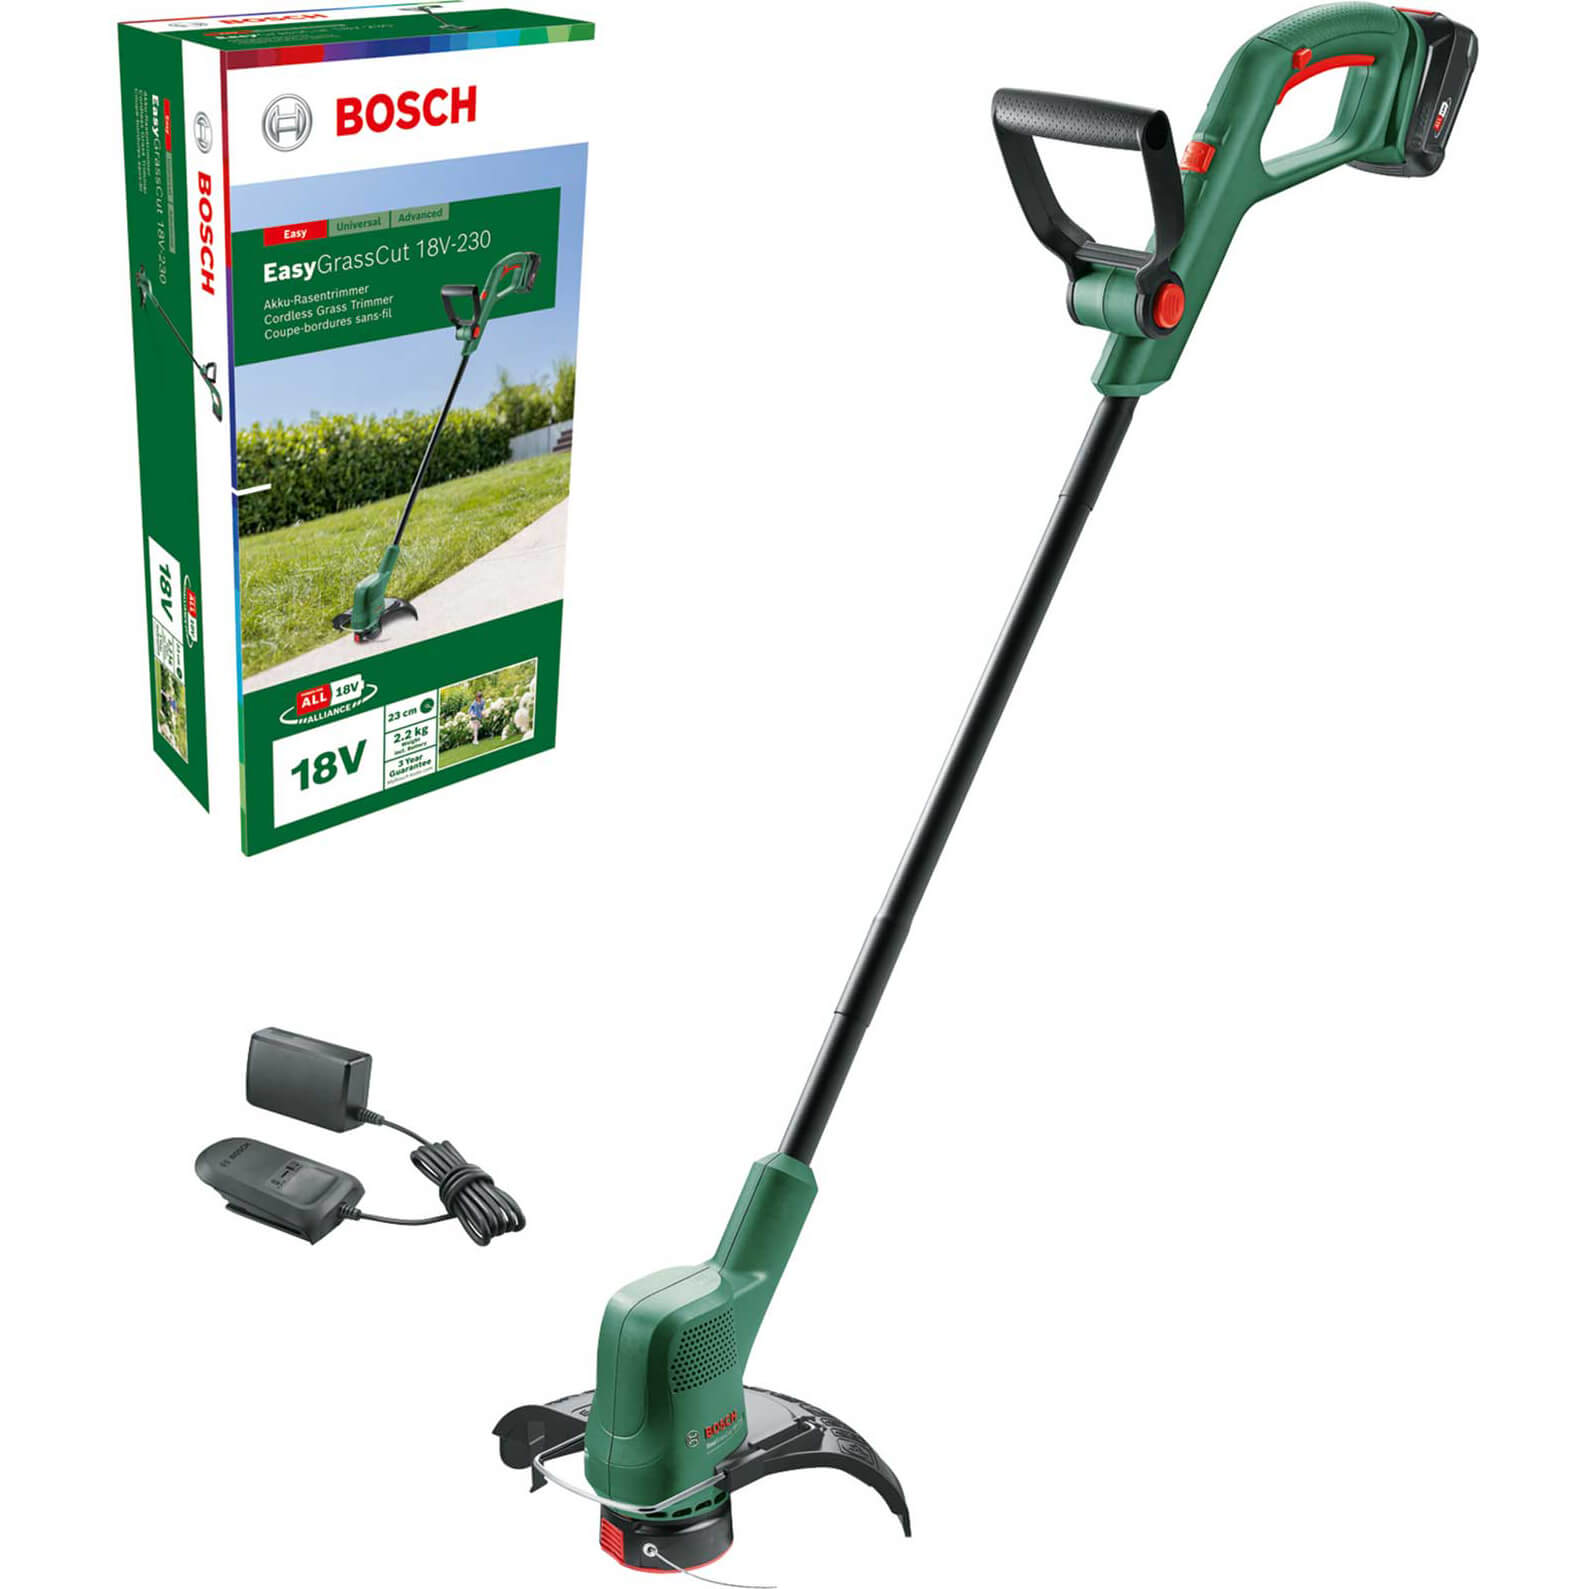 Bosch EASYGRASSCUT 18V-230 P4A 18v Cordless Grass Trimmer and Edger 230mm 1 x 2ah Li-ion Charger